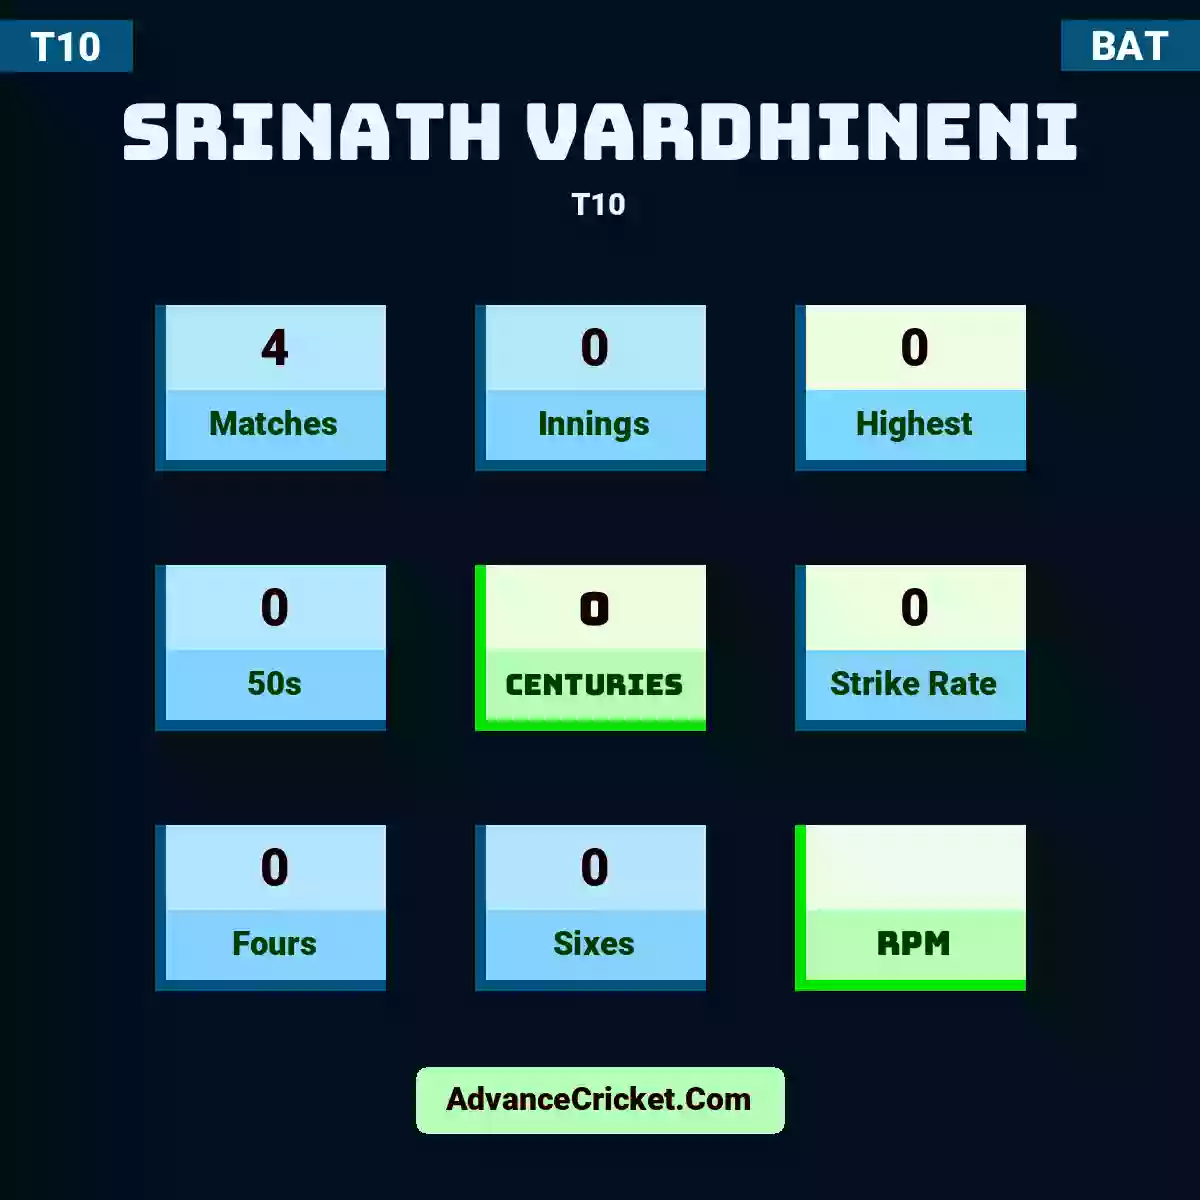 Srinath Vardhineni T10 , Srinath Vardhineni played 4 matches, scored 0 runs as highest, 0 half-centuries, and 0 centuries, with a strike rate of 0. S.Vardhineni hit 0 fours and 0 sixes.